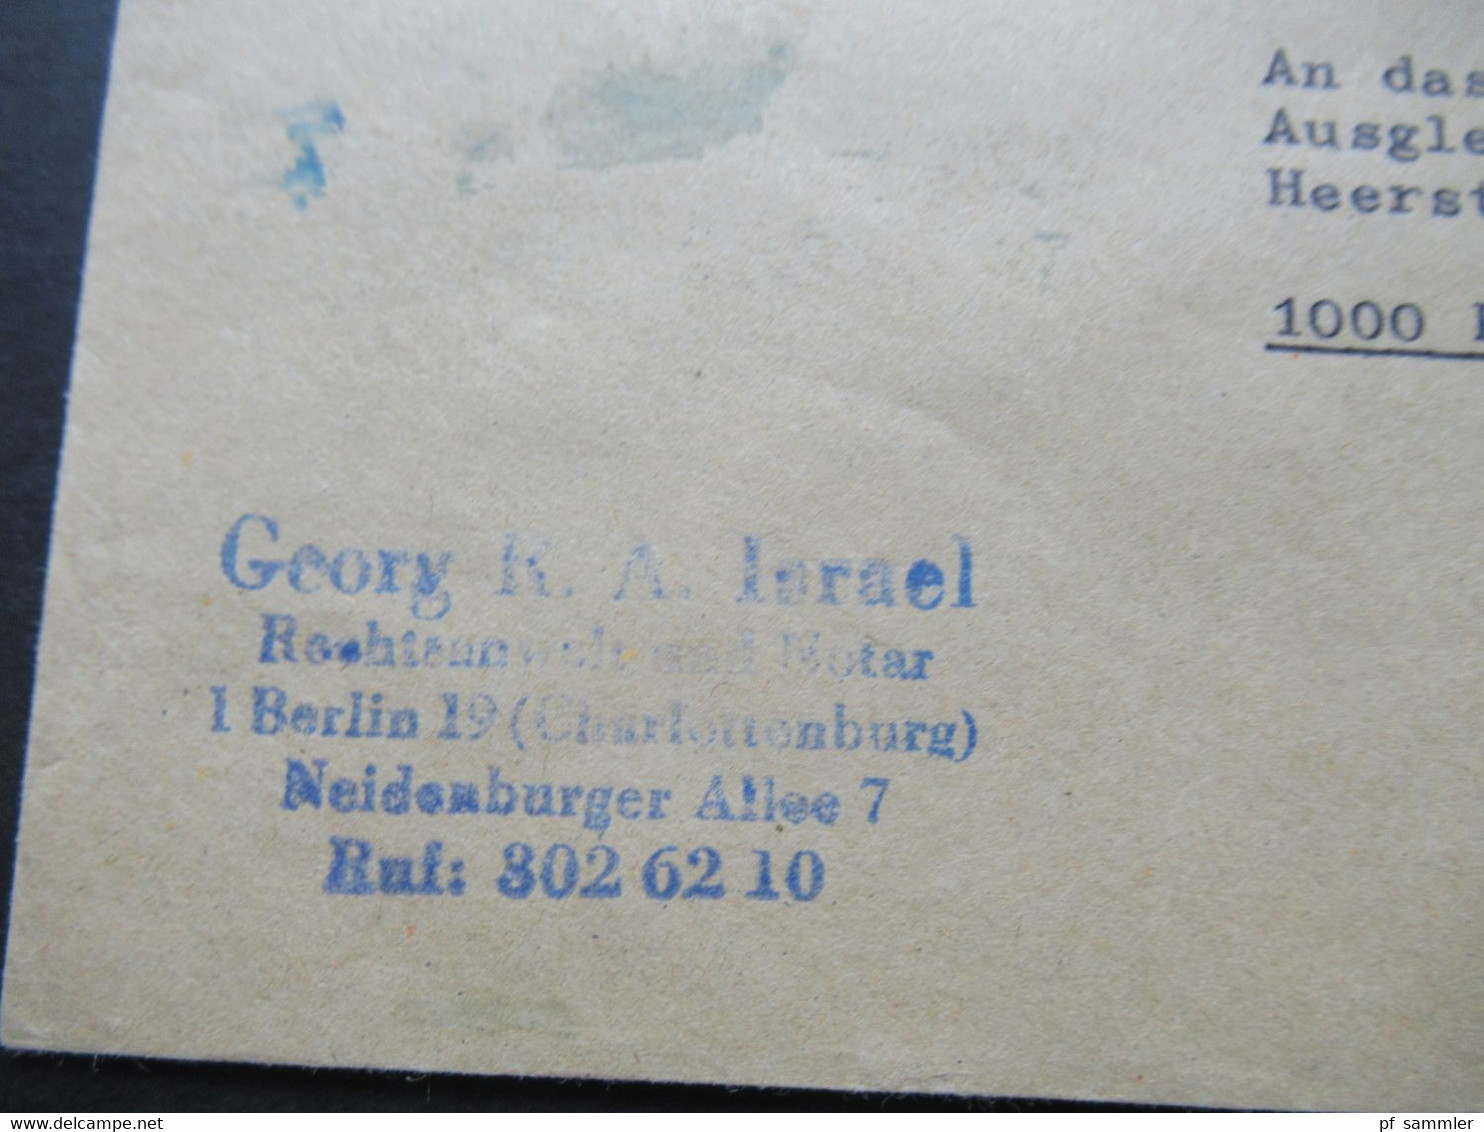 Berlin (West) 1977 Freimarken Industrie U. Technik Nr.497 EFUmschlag Georg R.A. Israel Rechtsanwalt (Judaika) - Briefe U. Dokumente